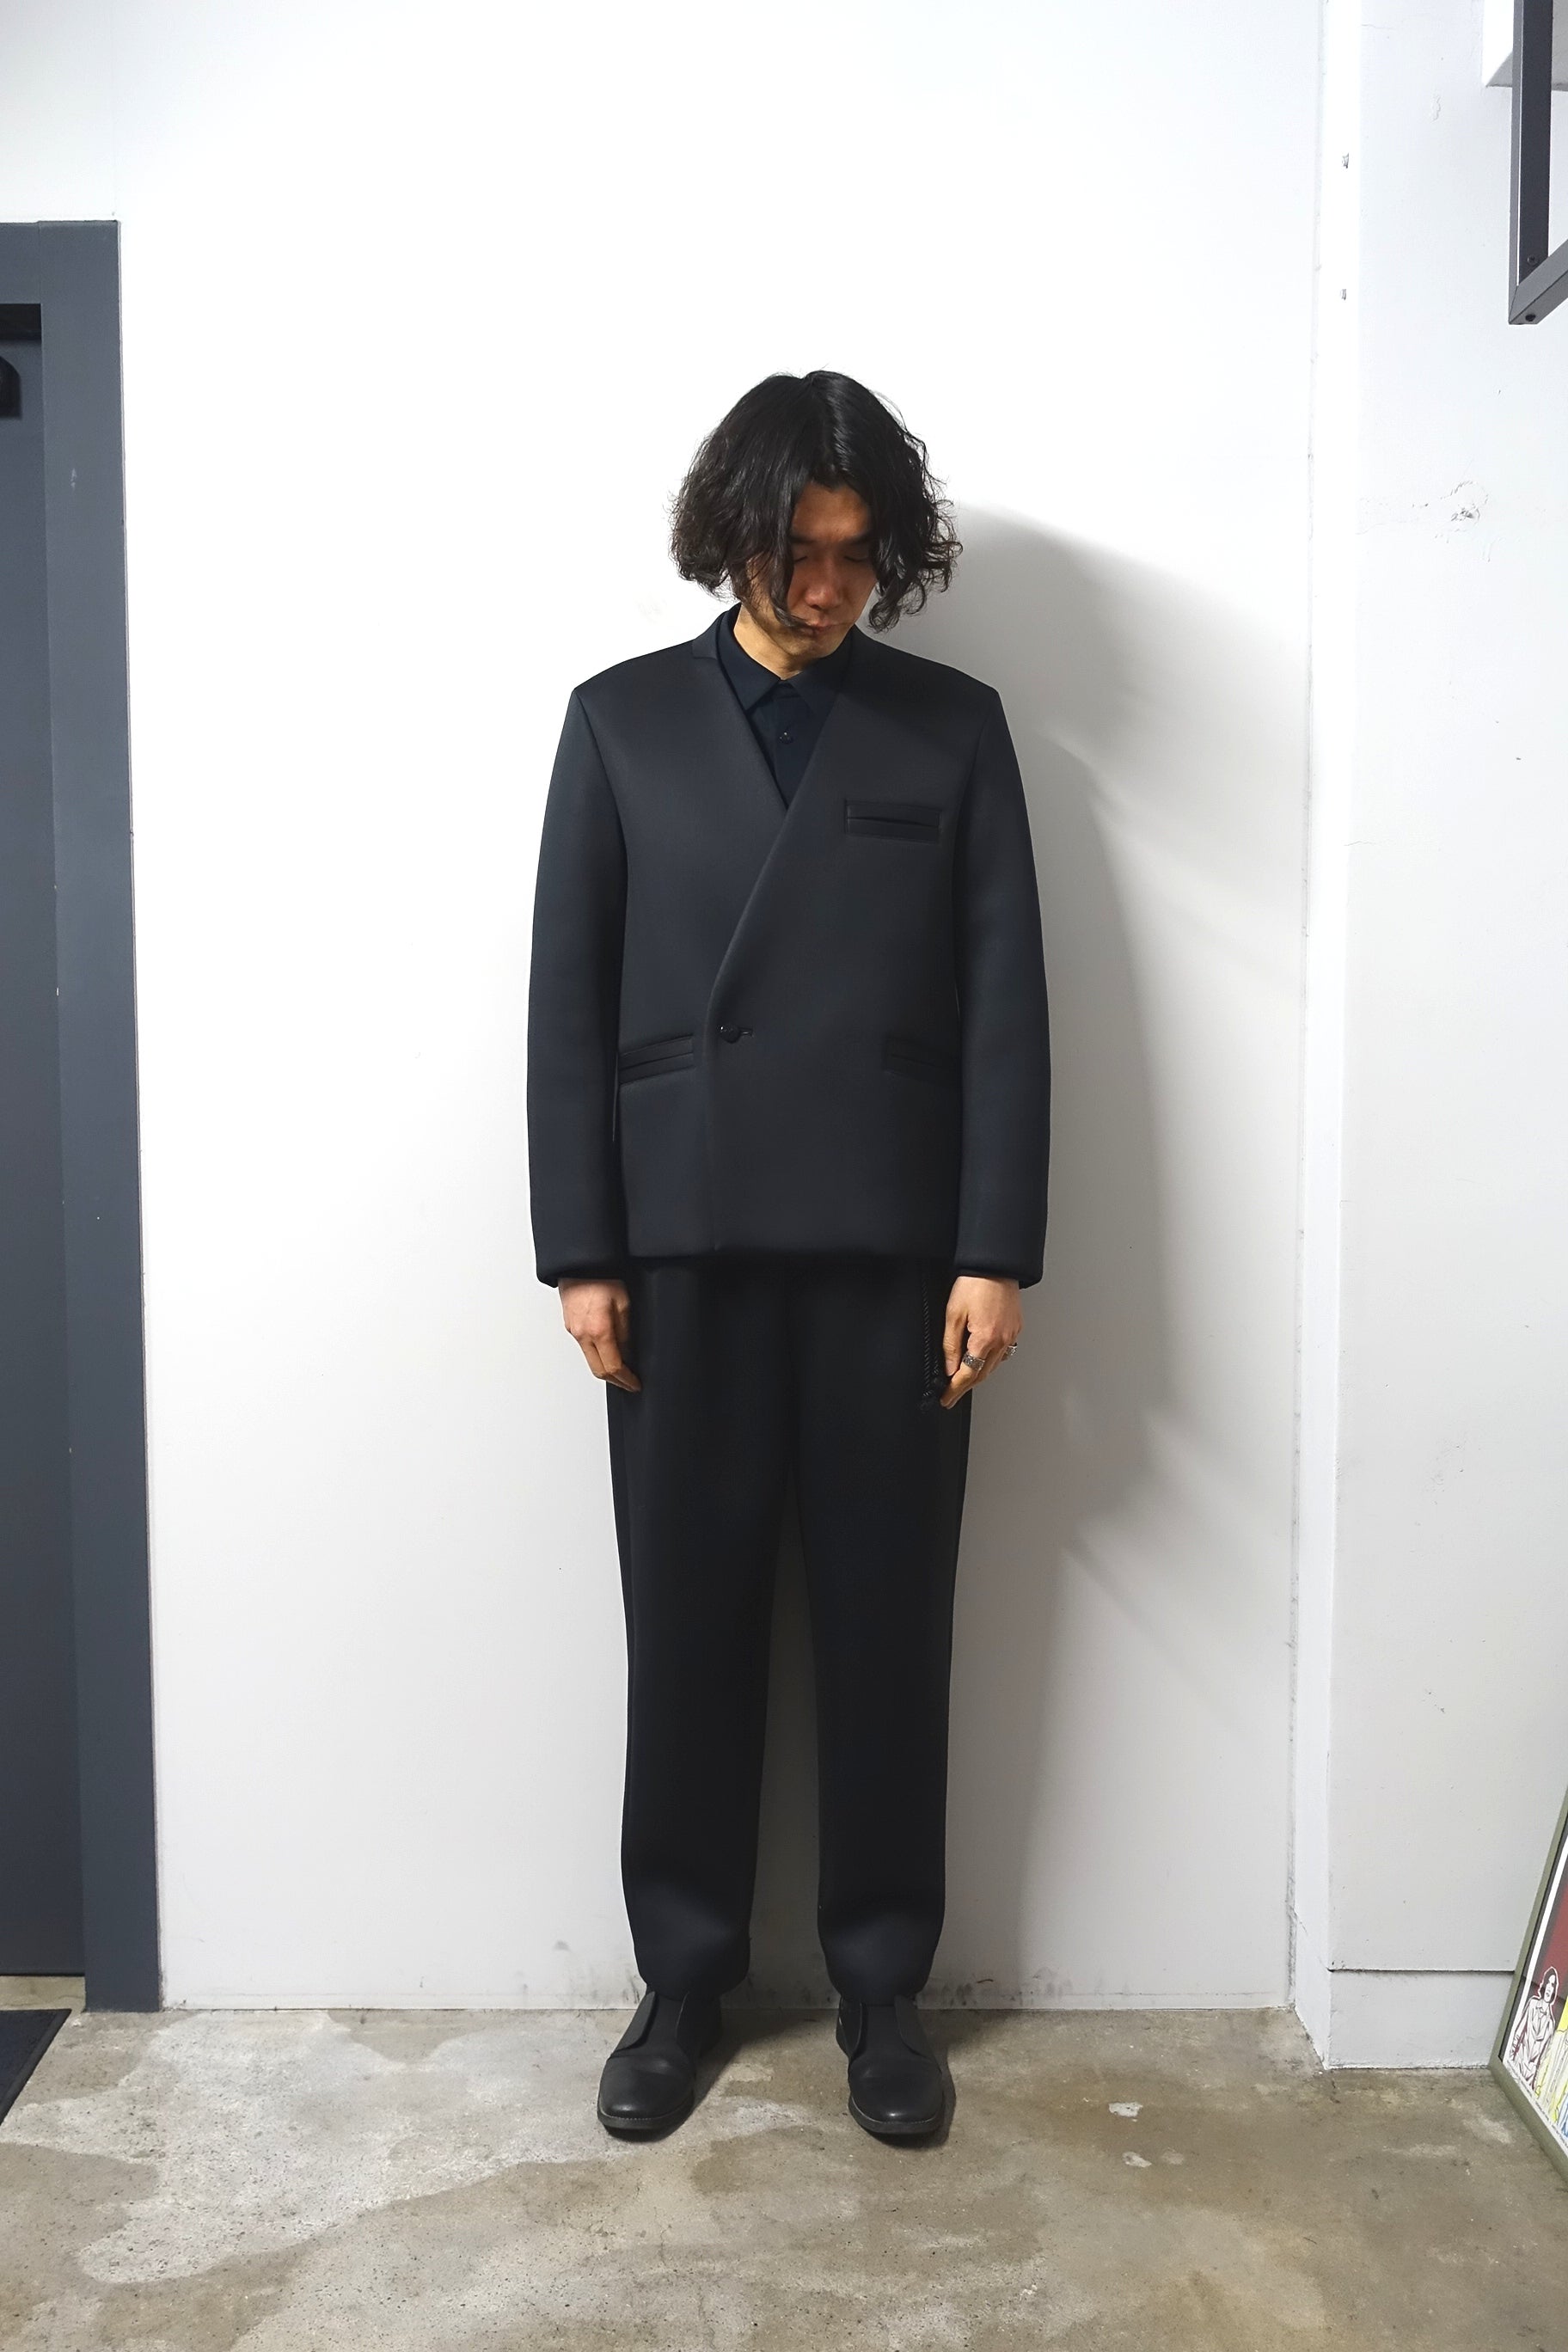 ETHOSENS(エトセンス)/Elastic colorless jacket/Black blue 通販 